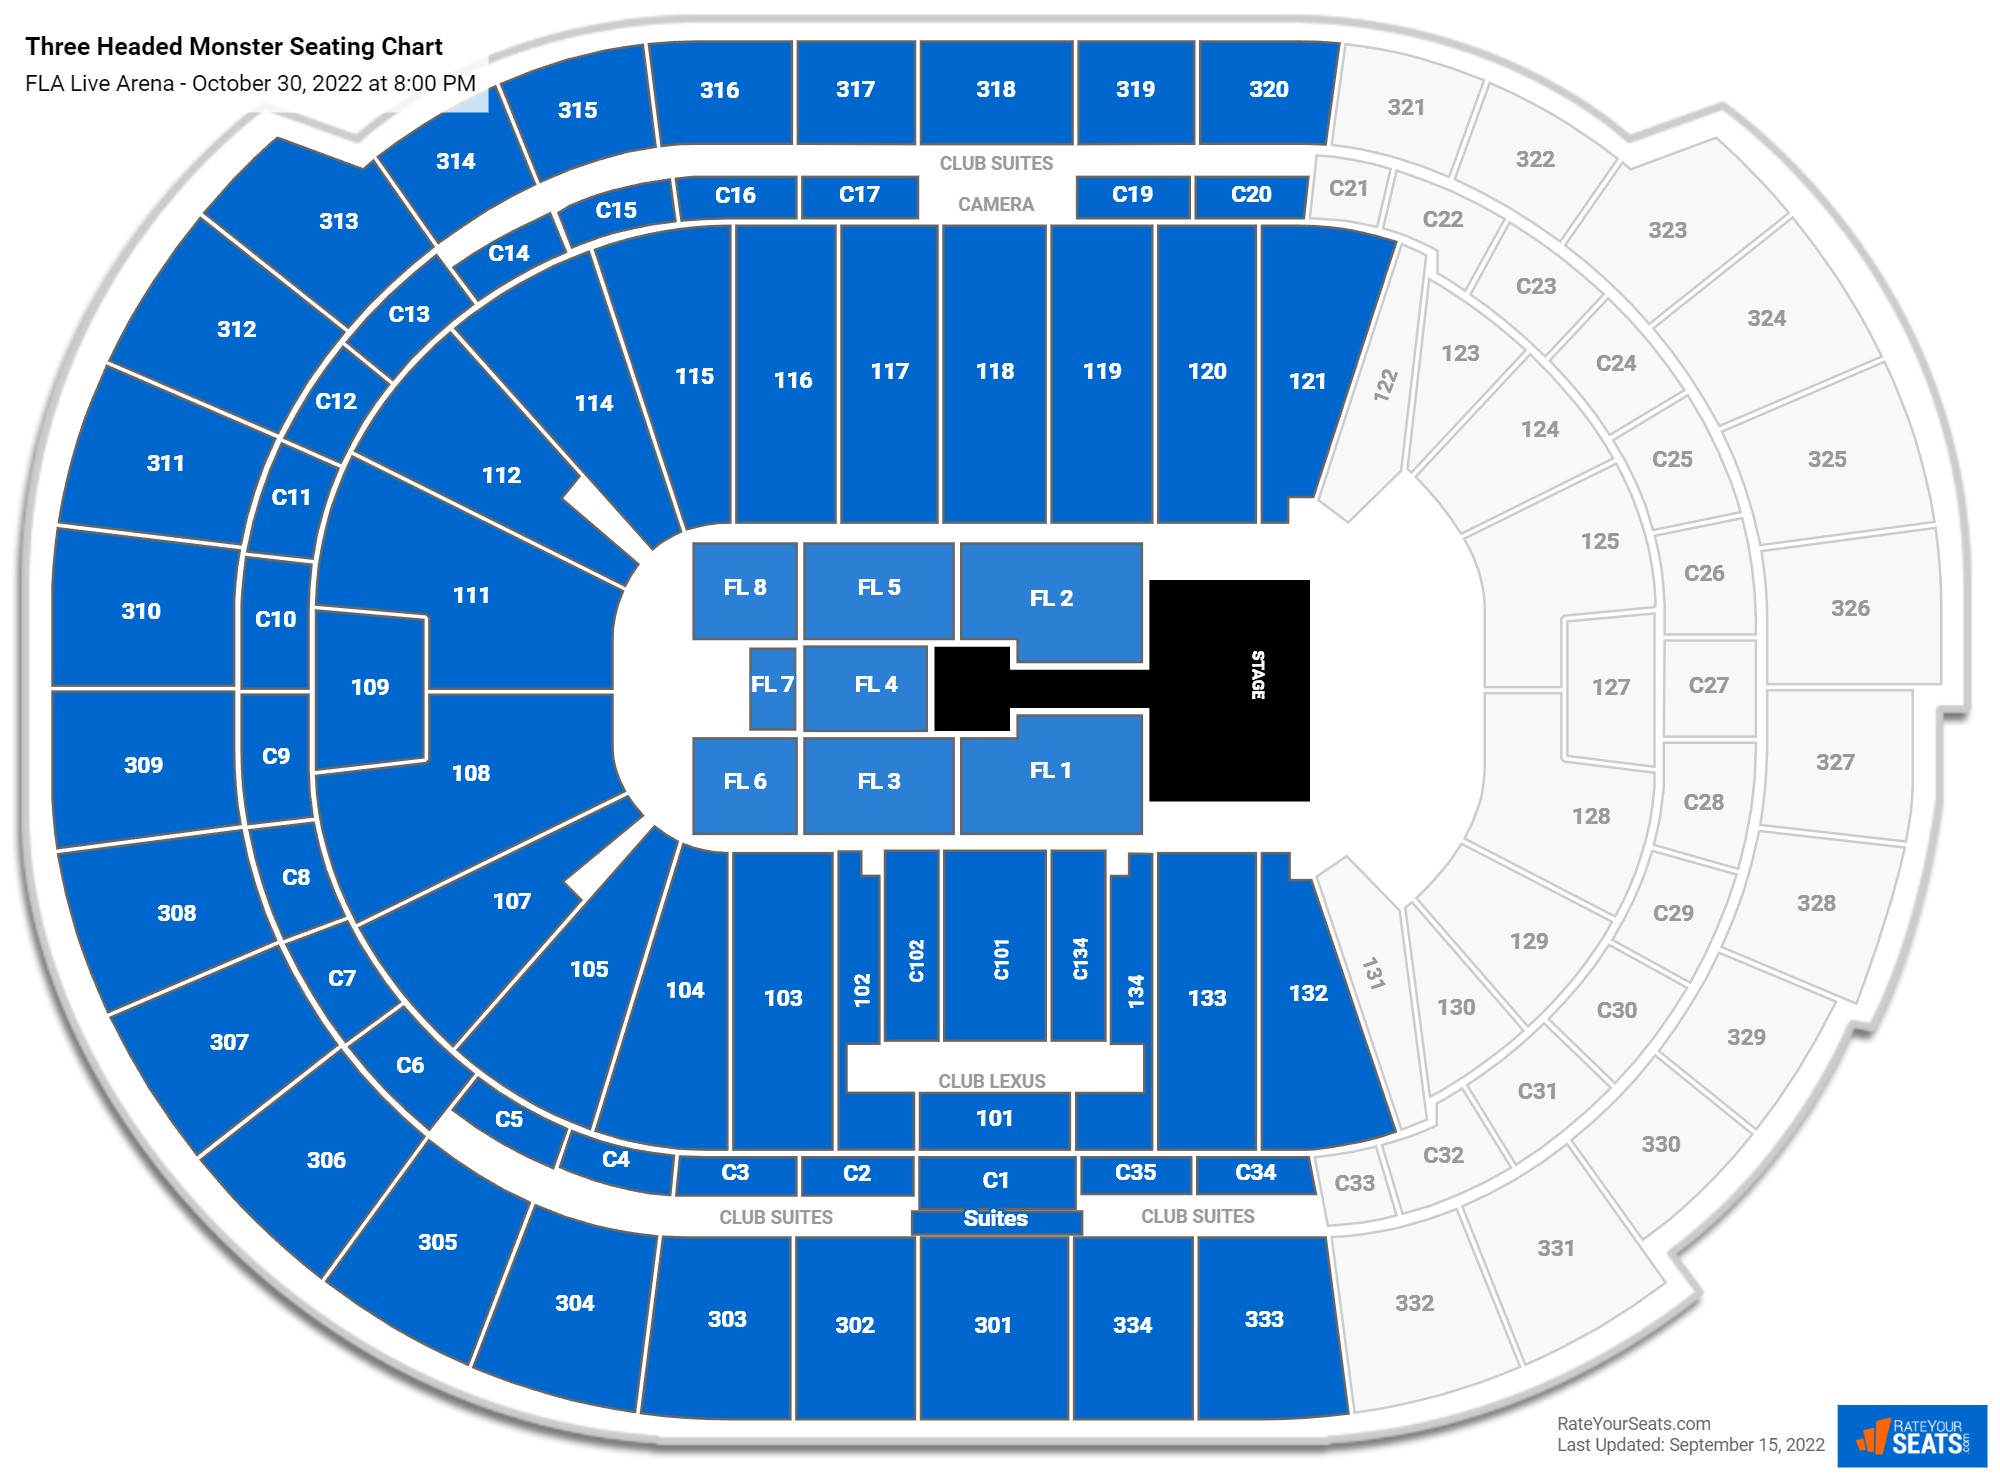 FLA Live Arena Concert Seating Chart - RateYourSeats.com